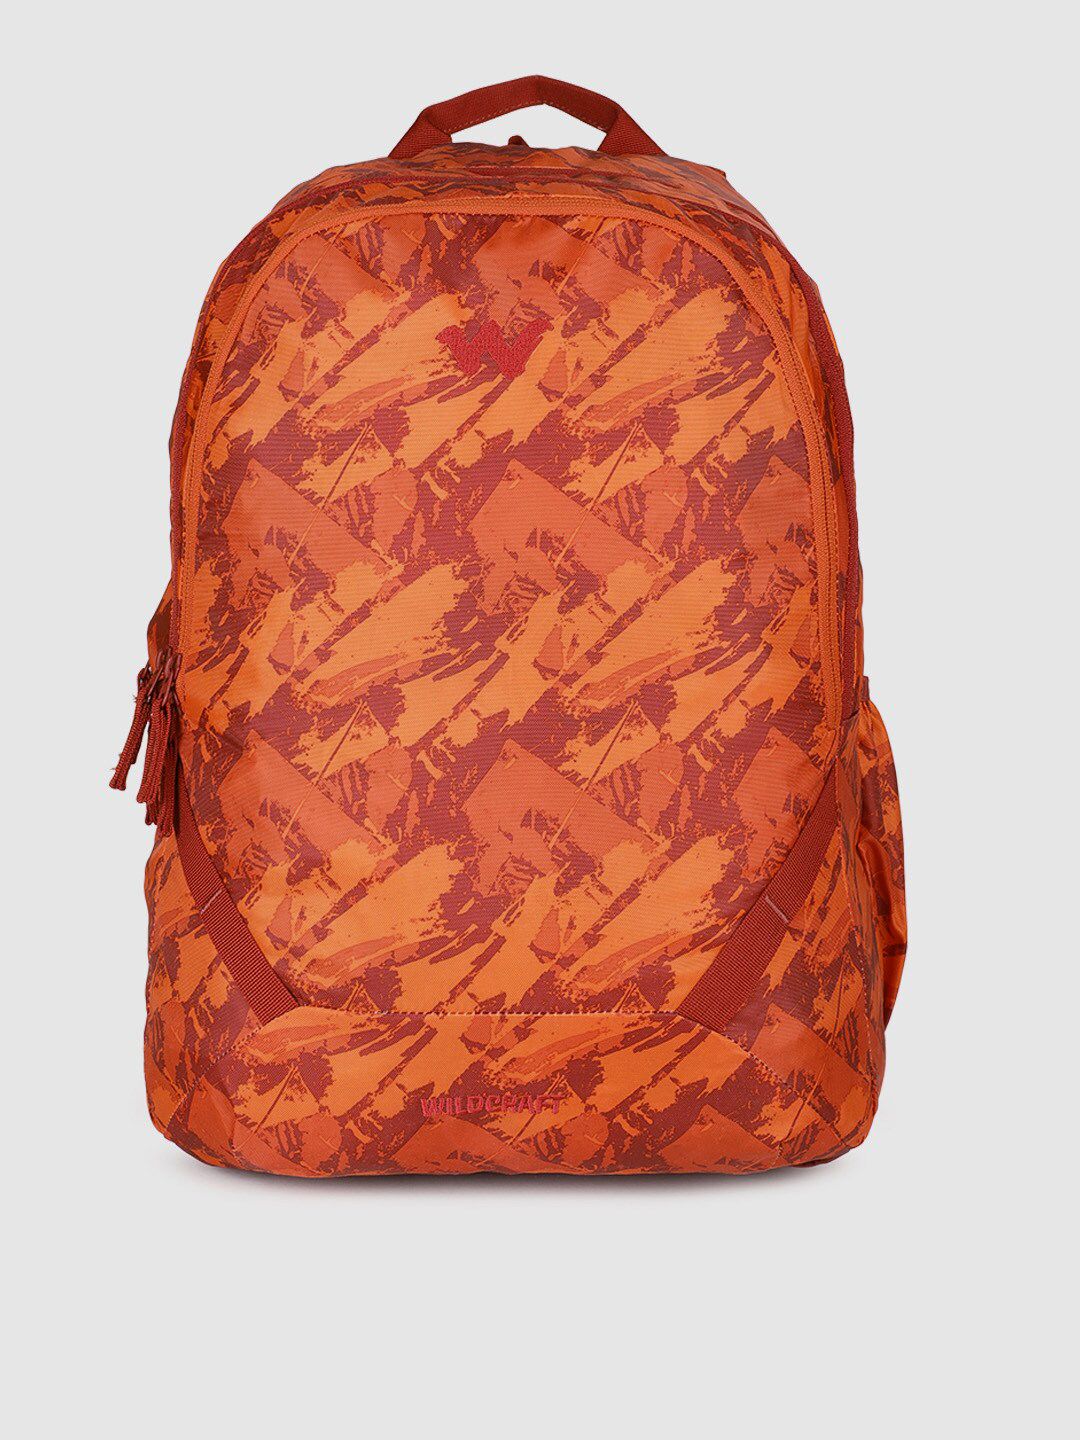 Wildcraft Unisex Orange Bravo2 Graphic Backpack Price in India